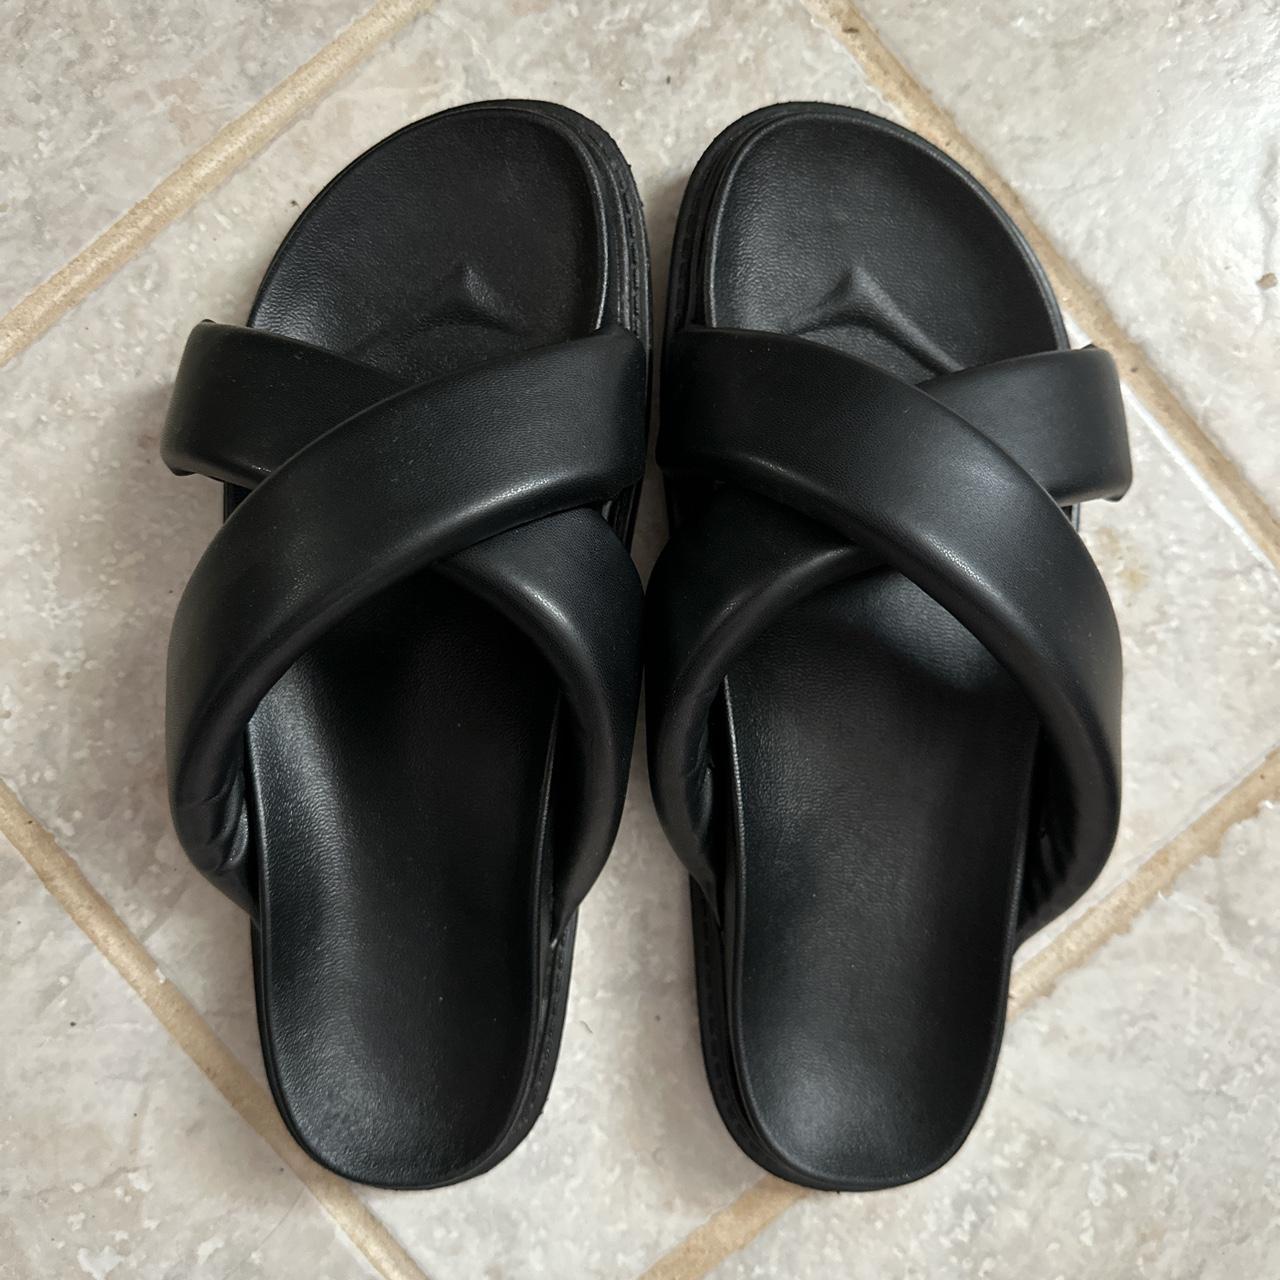 Here Black Sandals